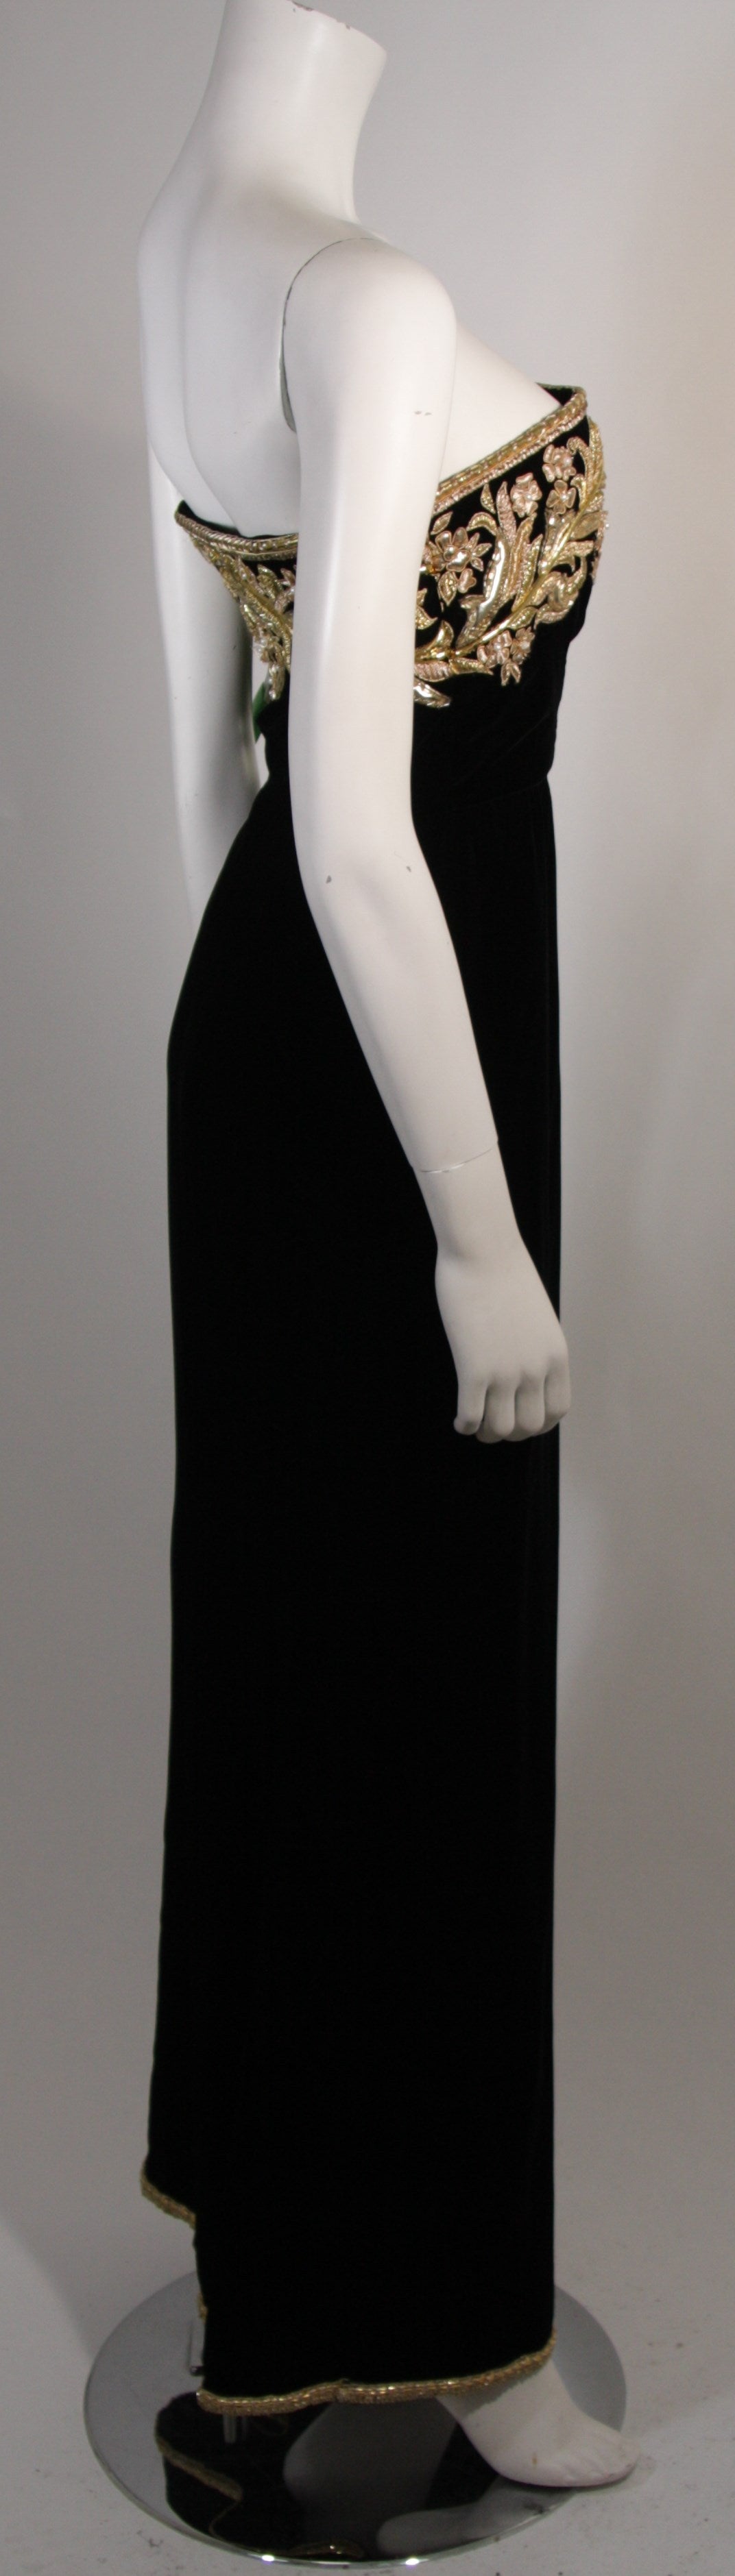 Oscar De La Renta Black Velvet Gown with Metallic Embellishments 1